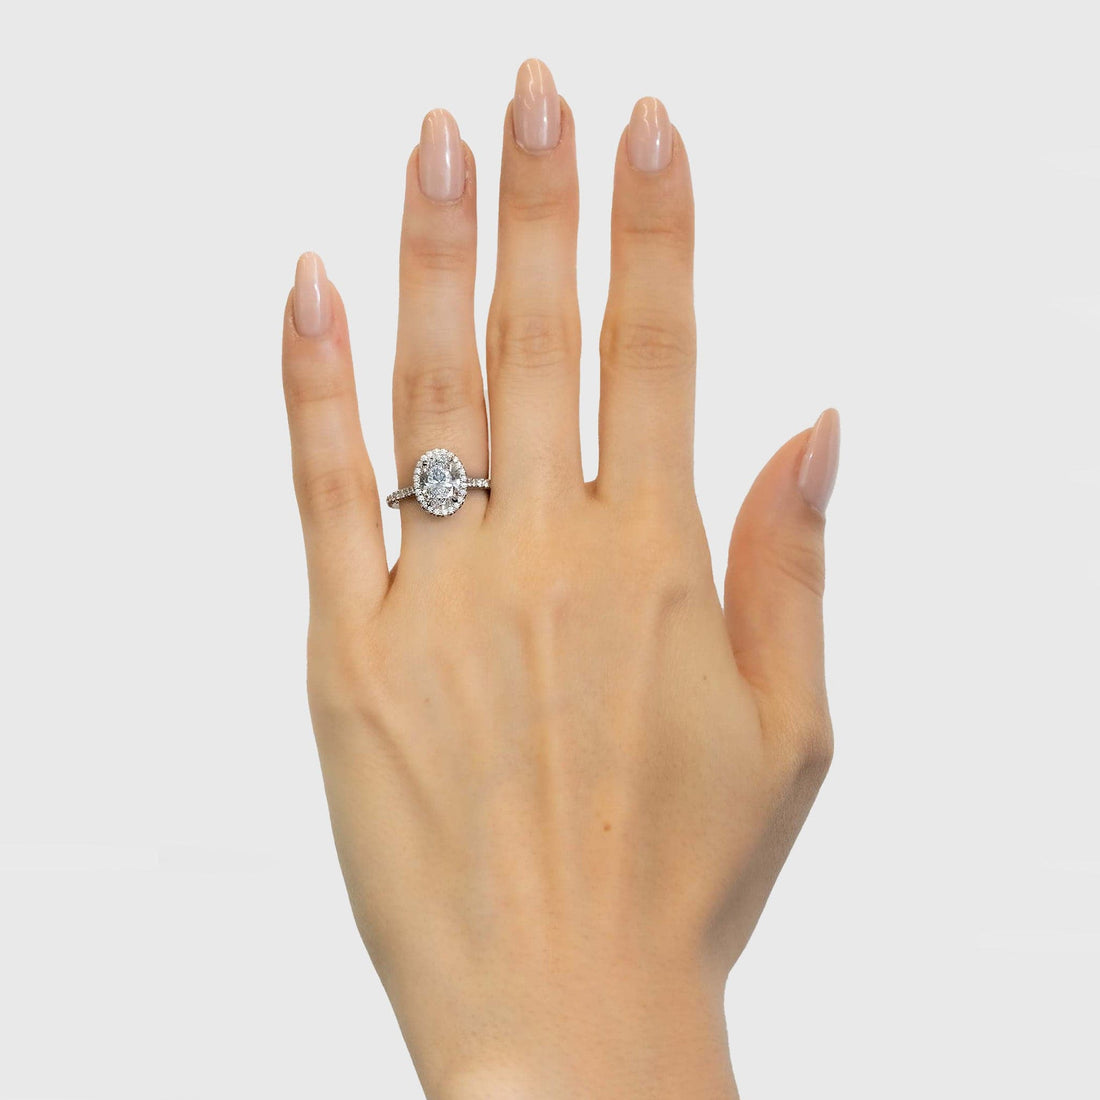 2 Carat Oval Diamond Halo Engagement Ring by Rahaminov Modeled